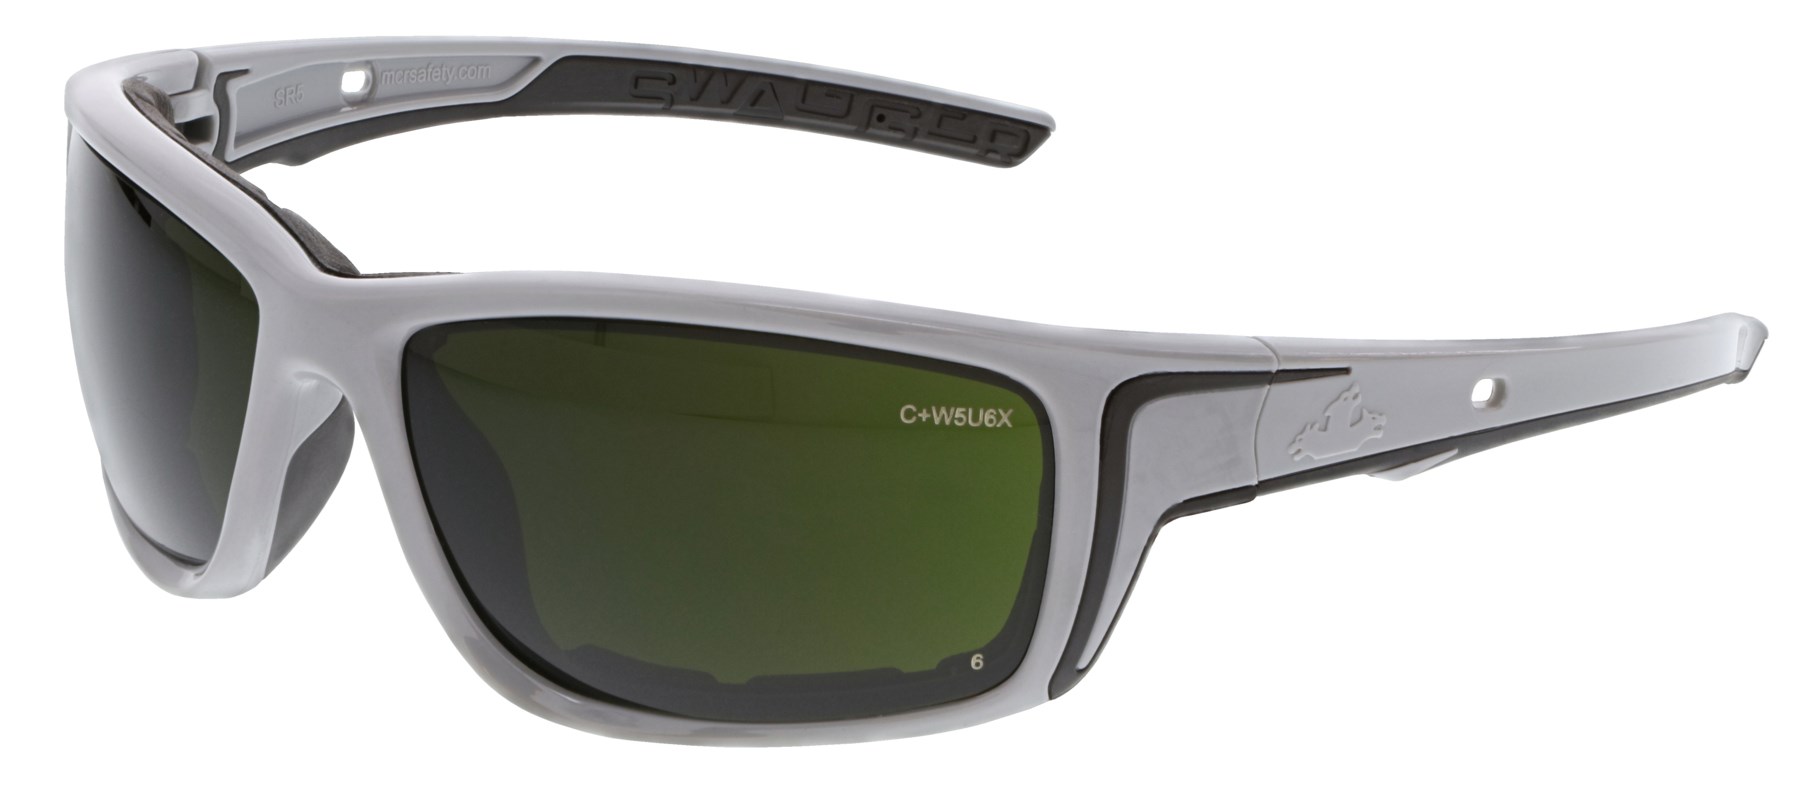 Swagger SR5 Foam-Lined MCR Safety Glasses,Gray Lens,Anti-Fog/Anti-Scratch 